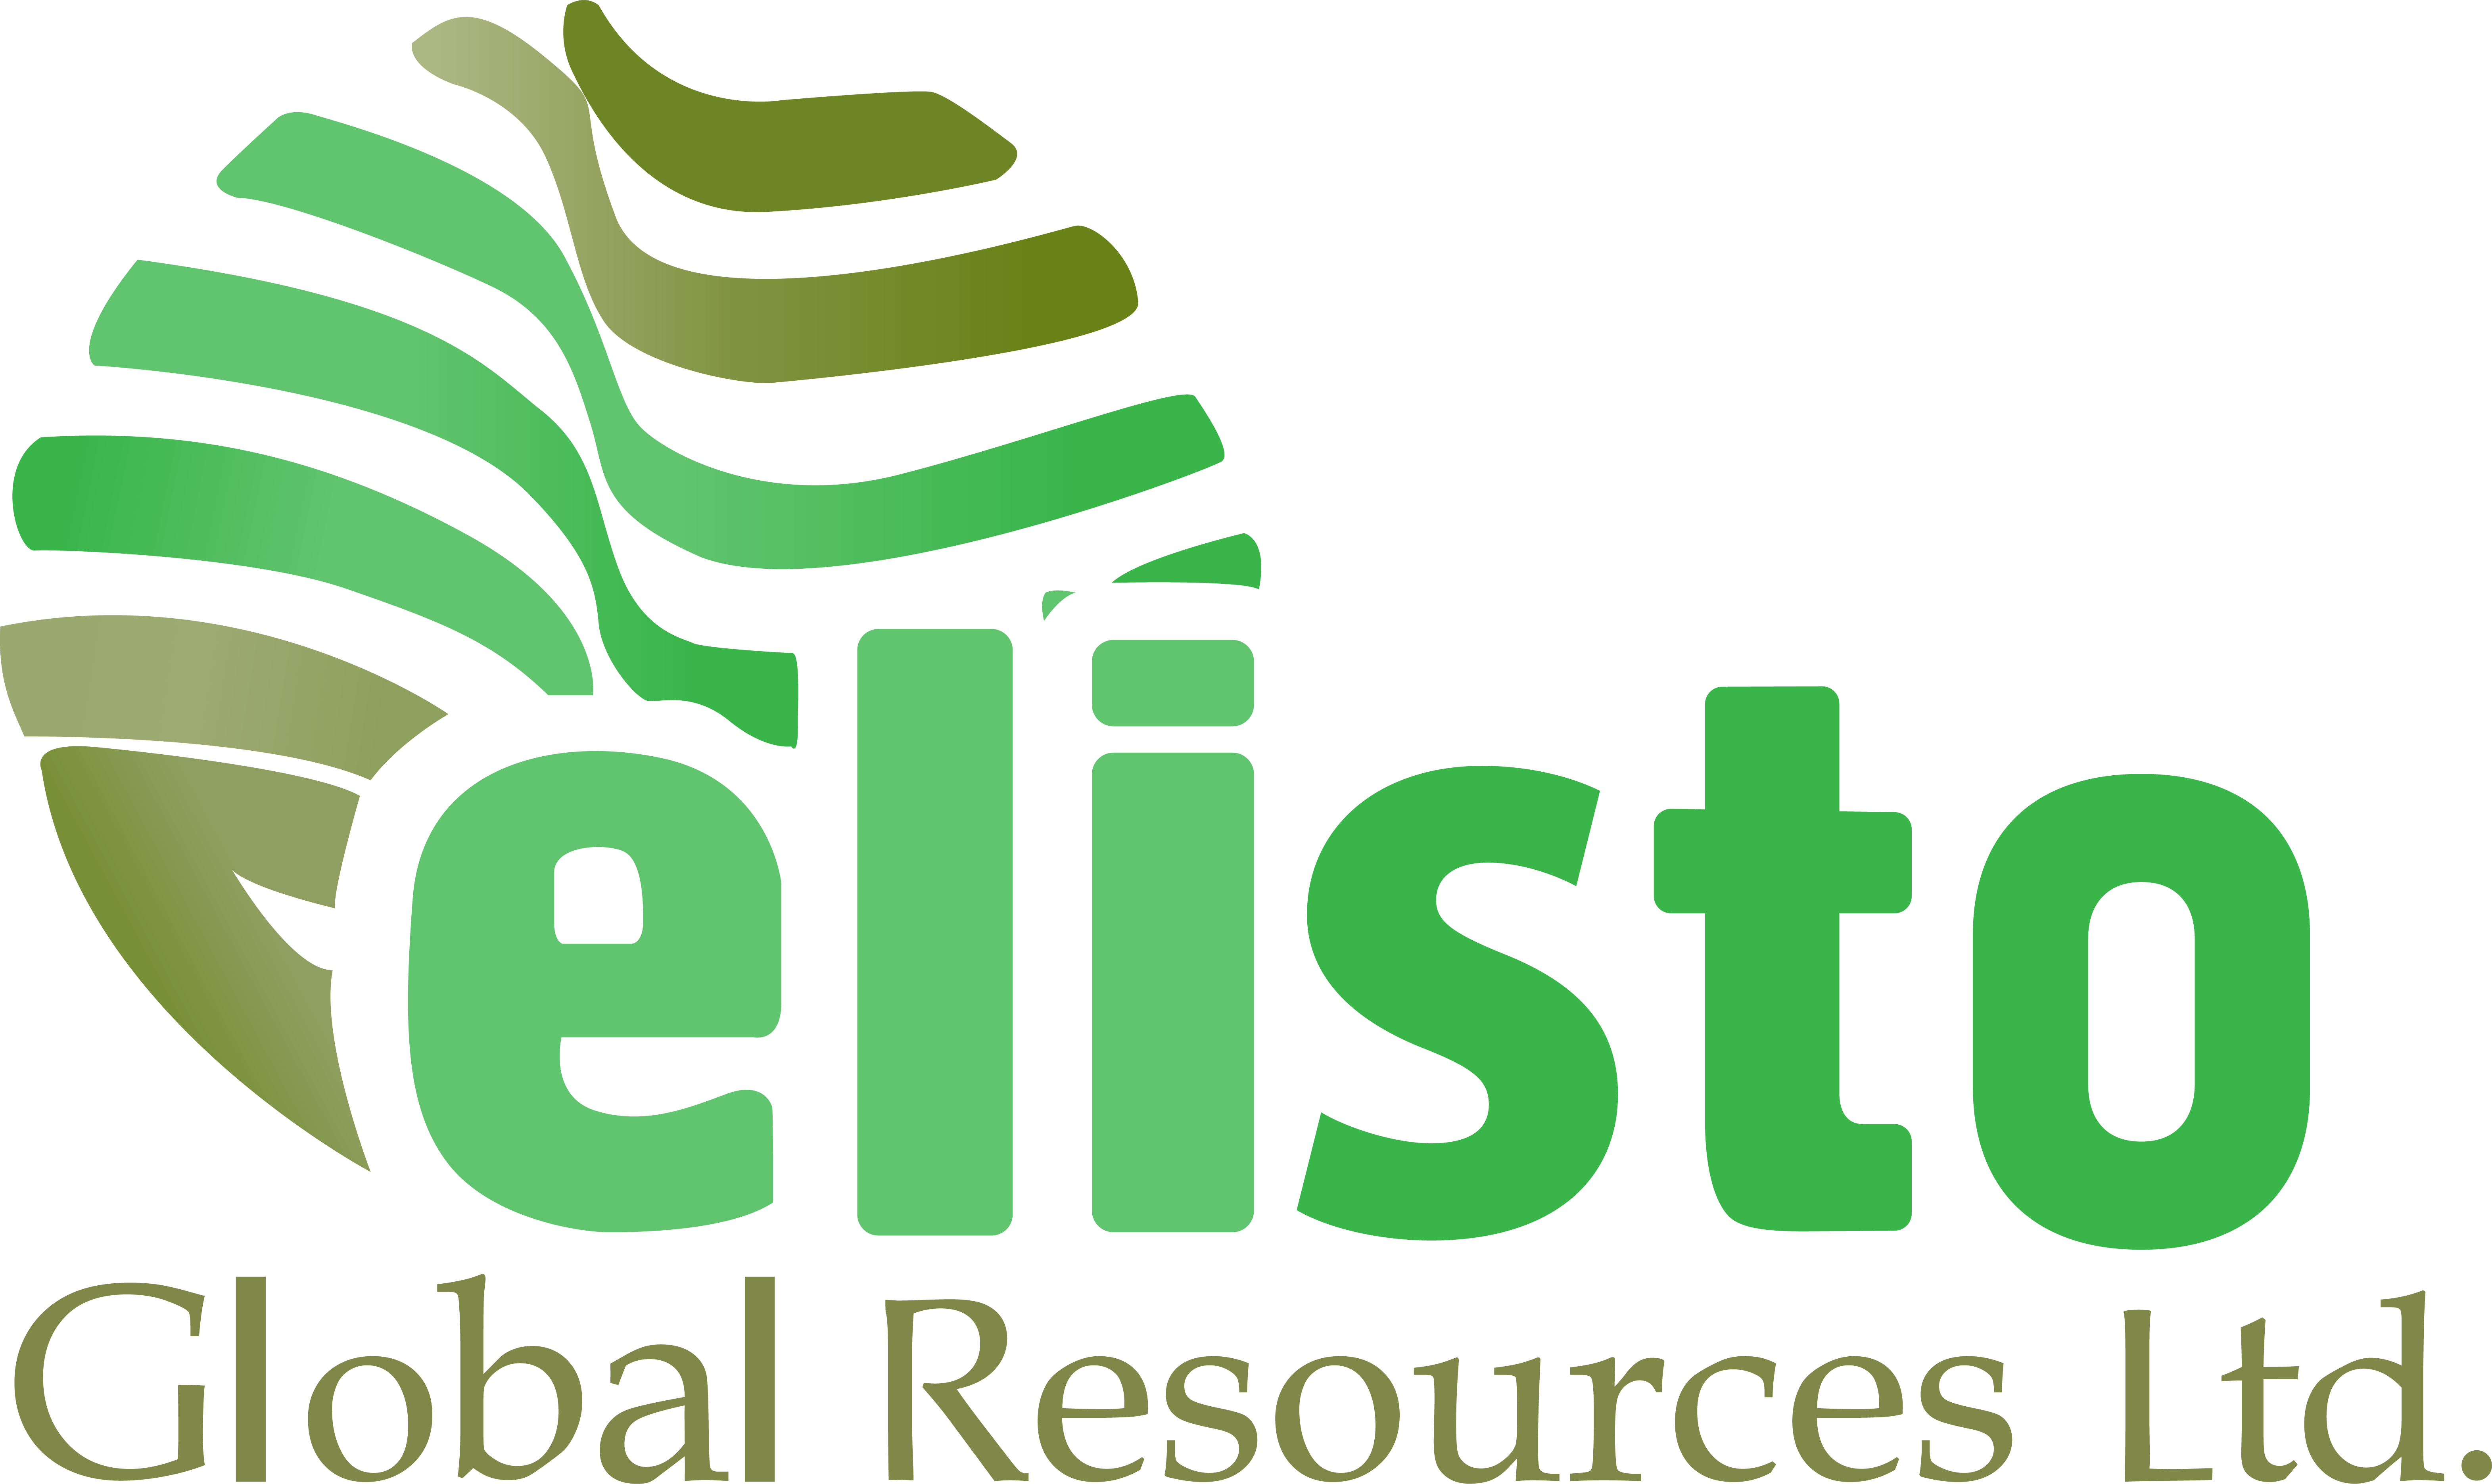 Elisto Global Resources